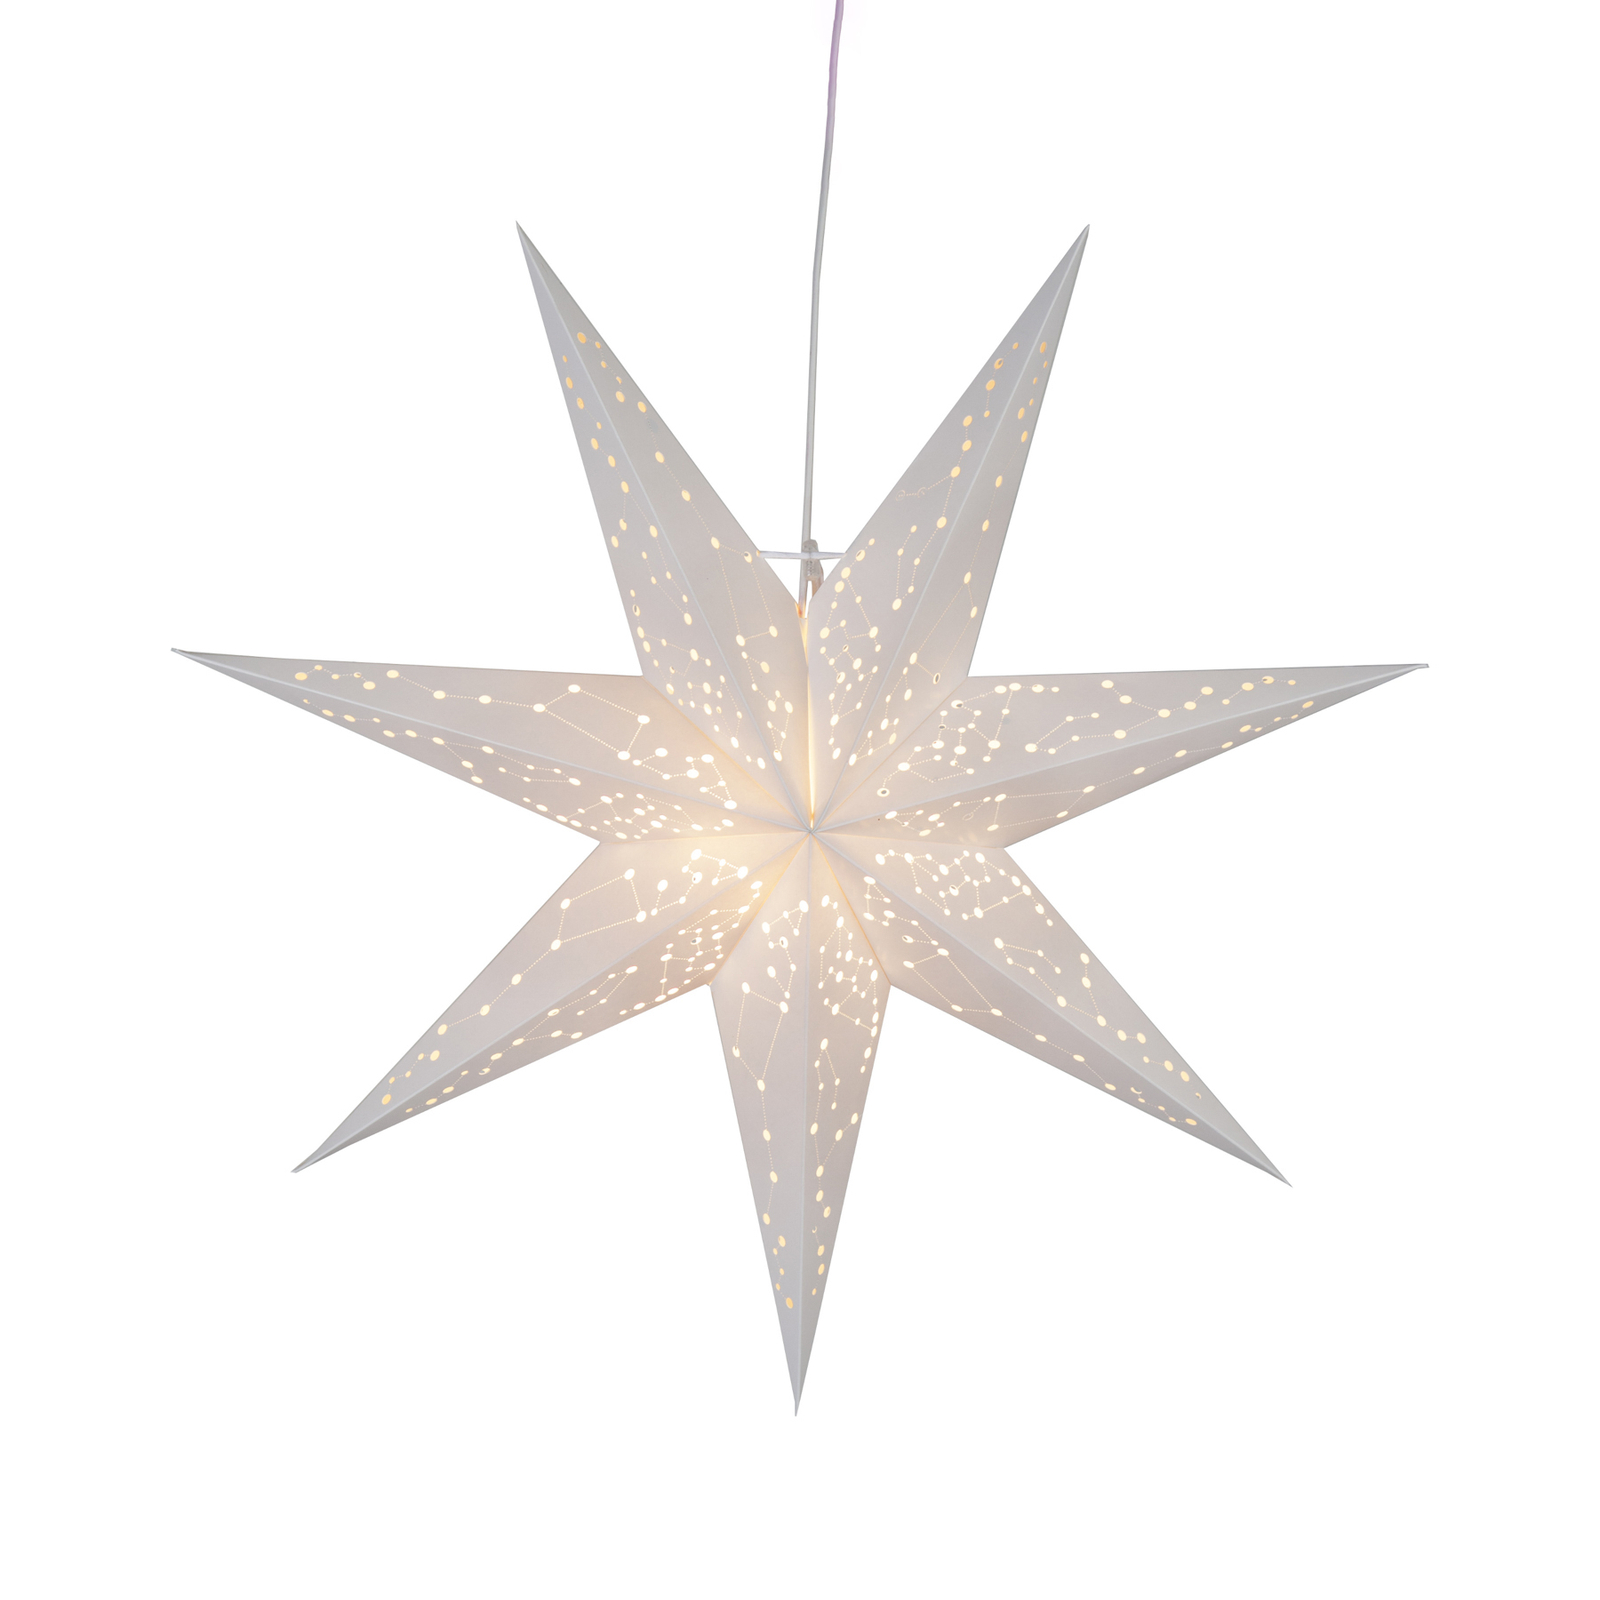 Deco csillag Galaxy papírból, fehér Ø 60 cm